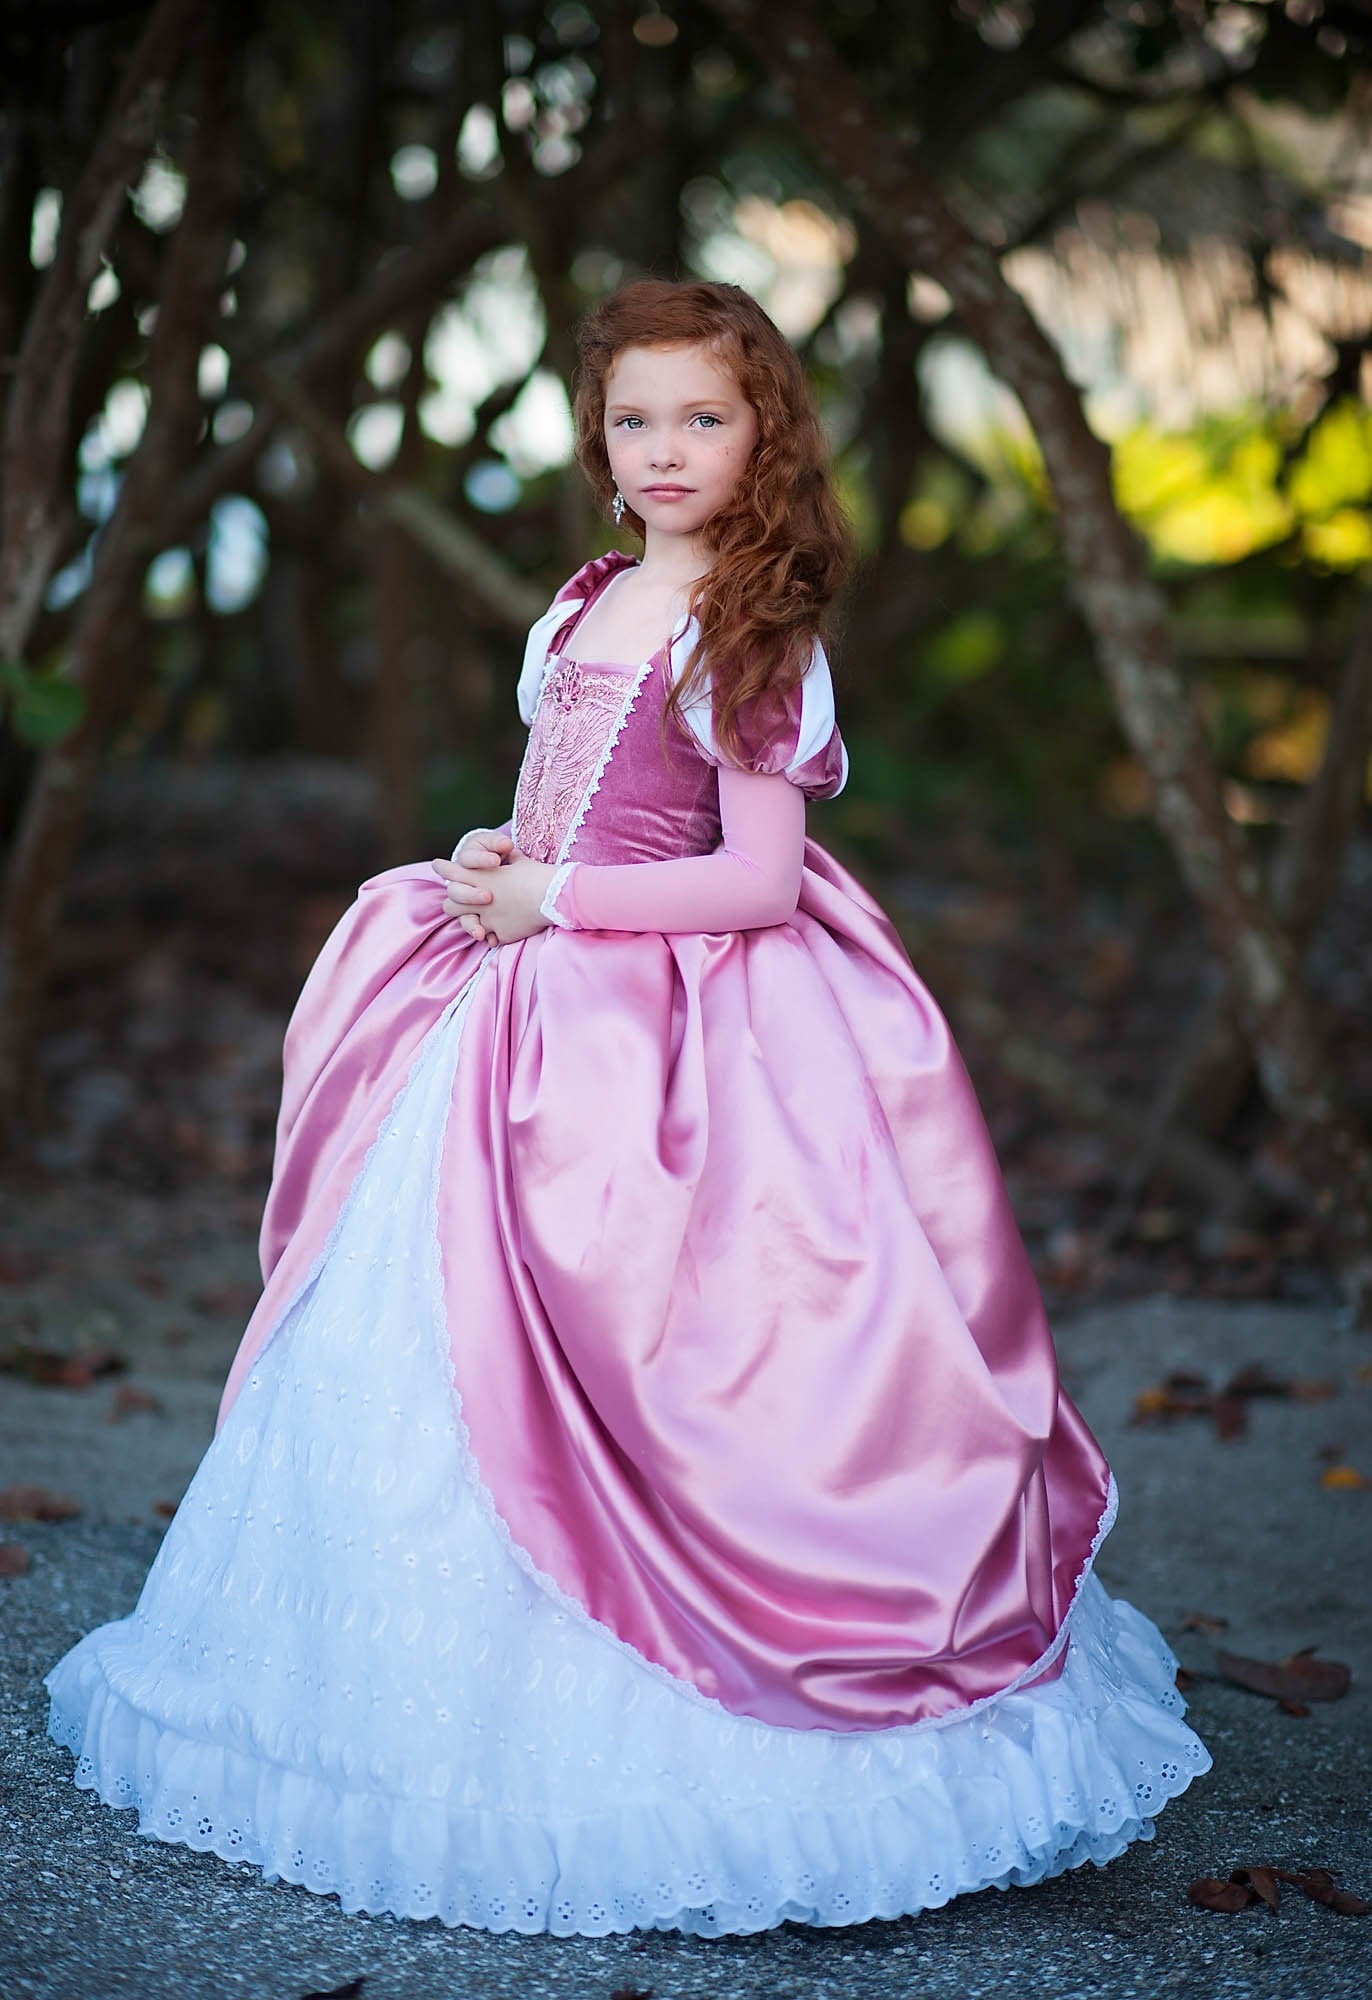 Petición modelo cascada Ariel Disney Inspired Dress Ariel's Pink and White Dress - Etsy